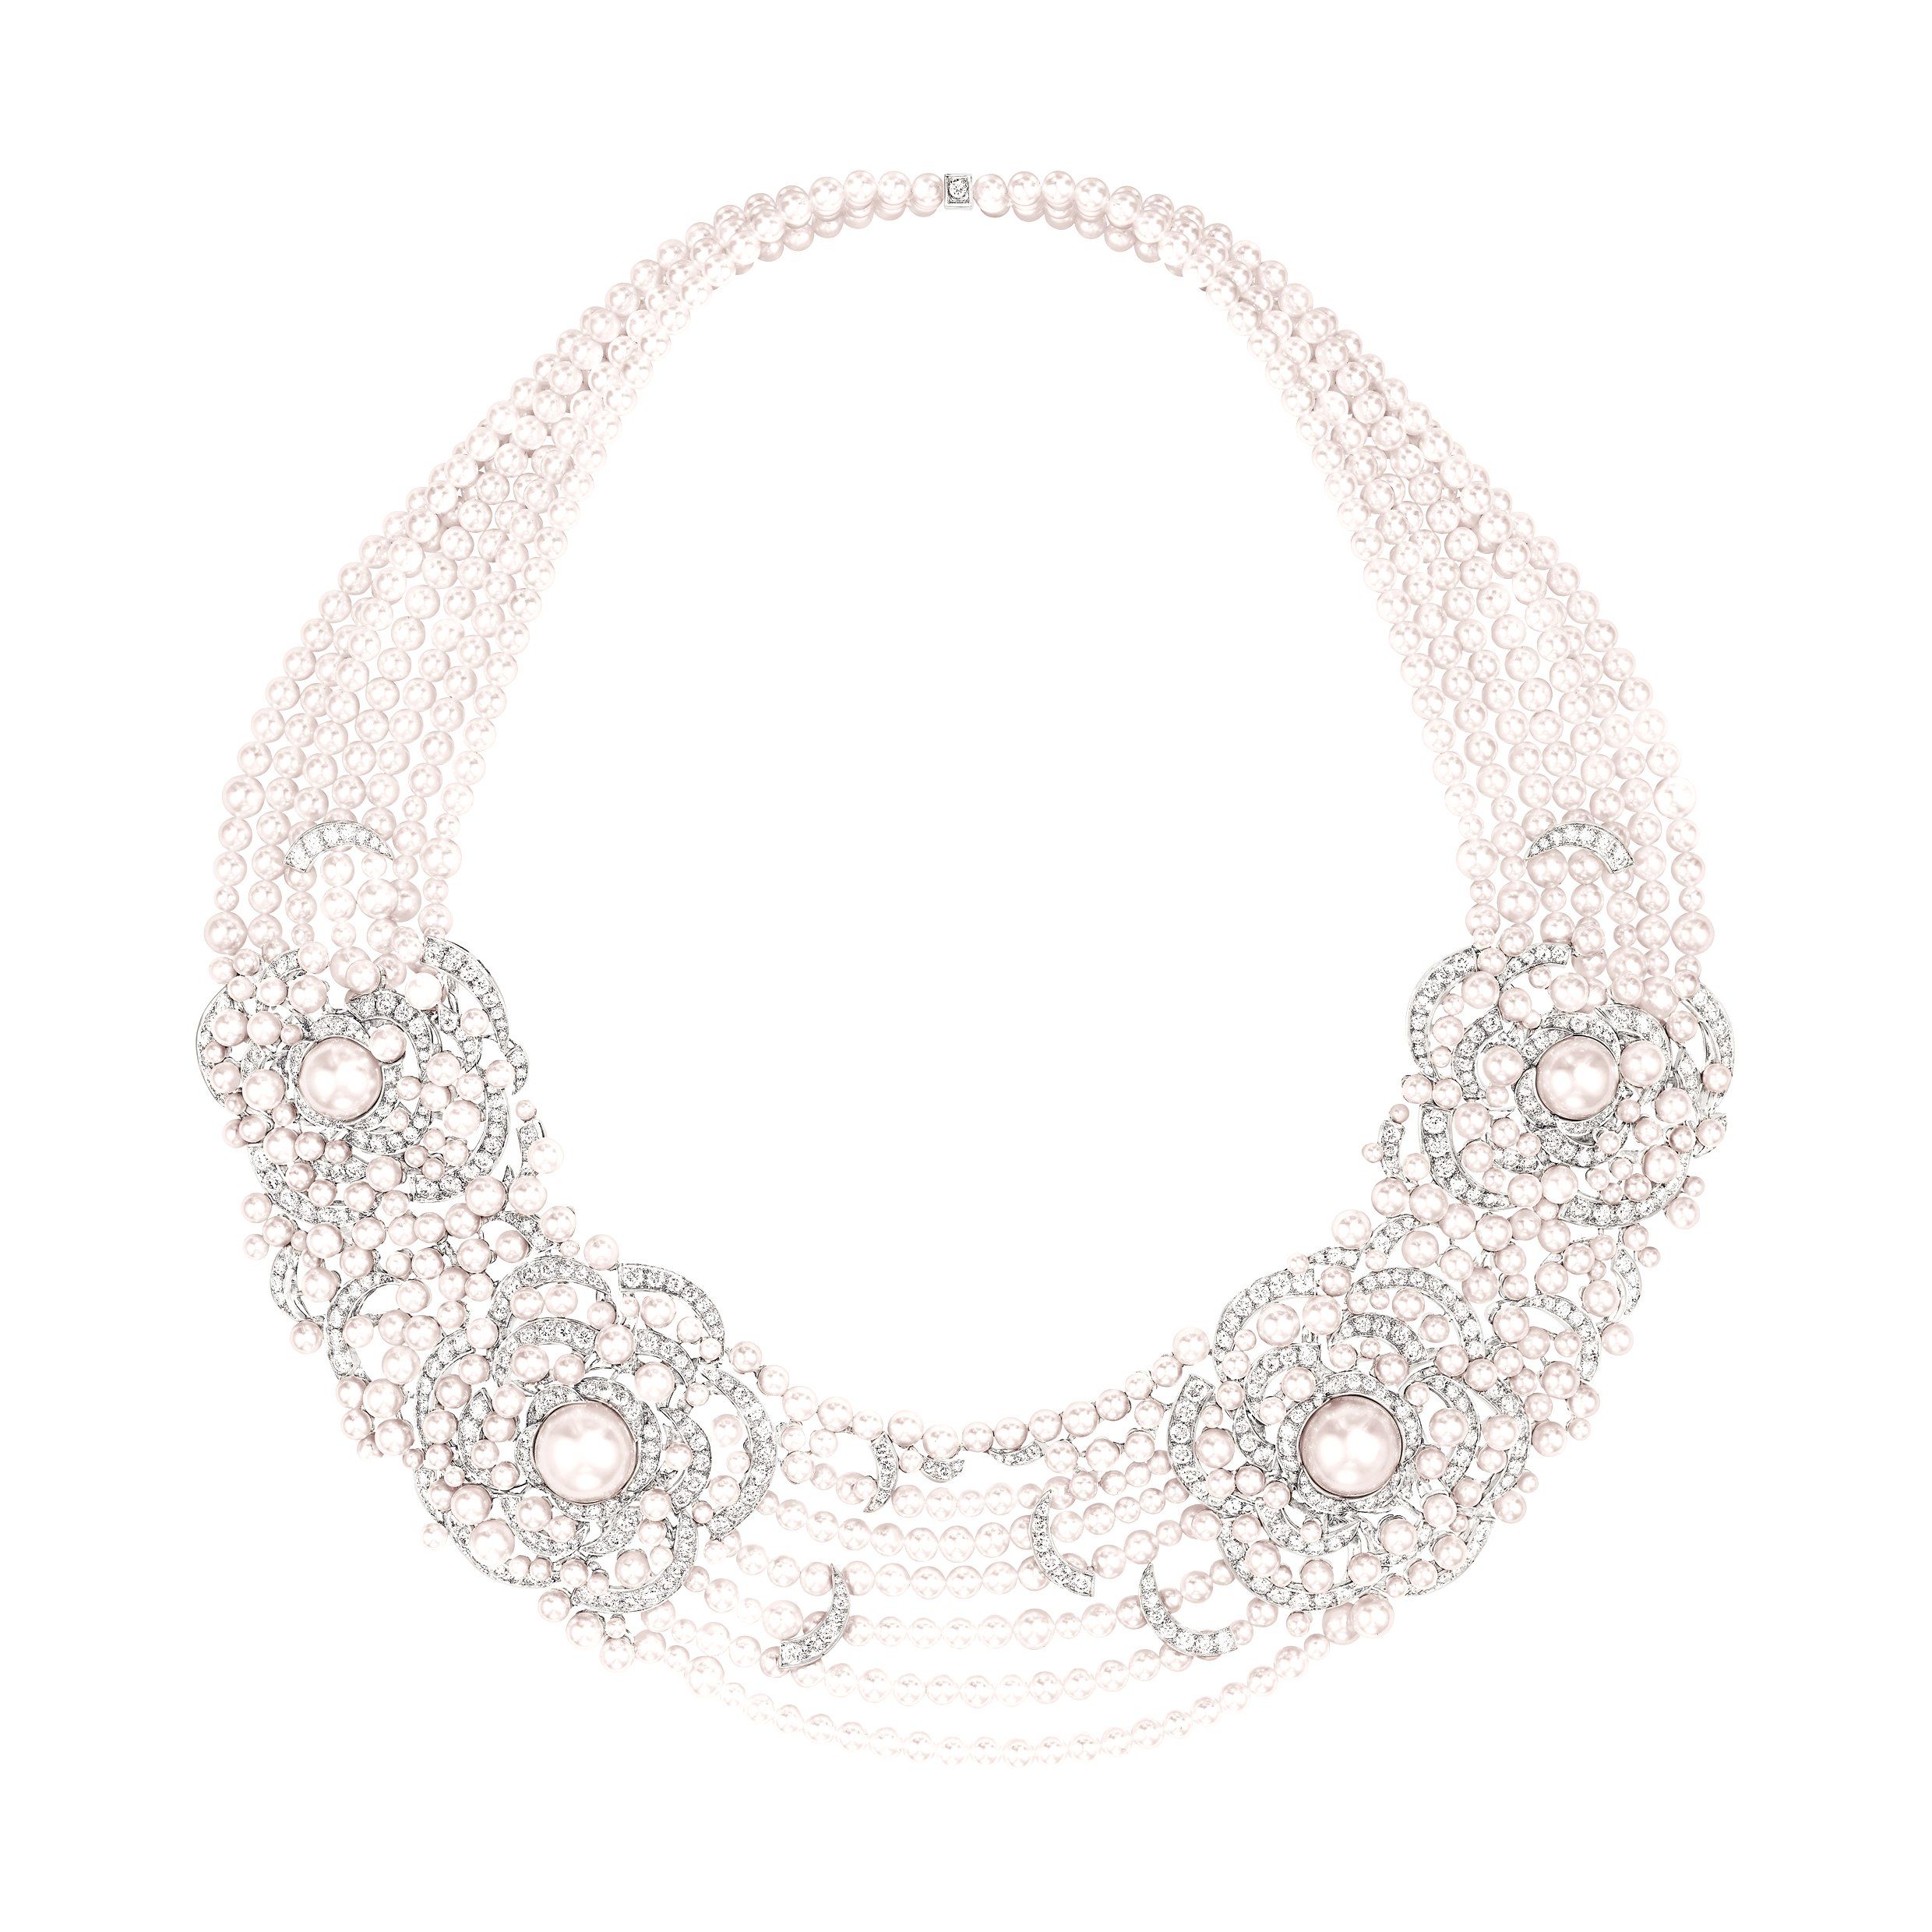 Chanel Fine Jewelry Holiday 2019 Lookbook at Bergdorf Goodman - NAWO